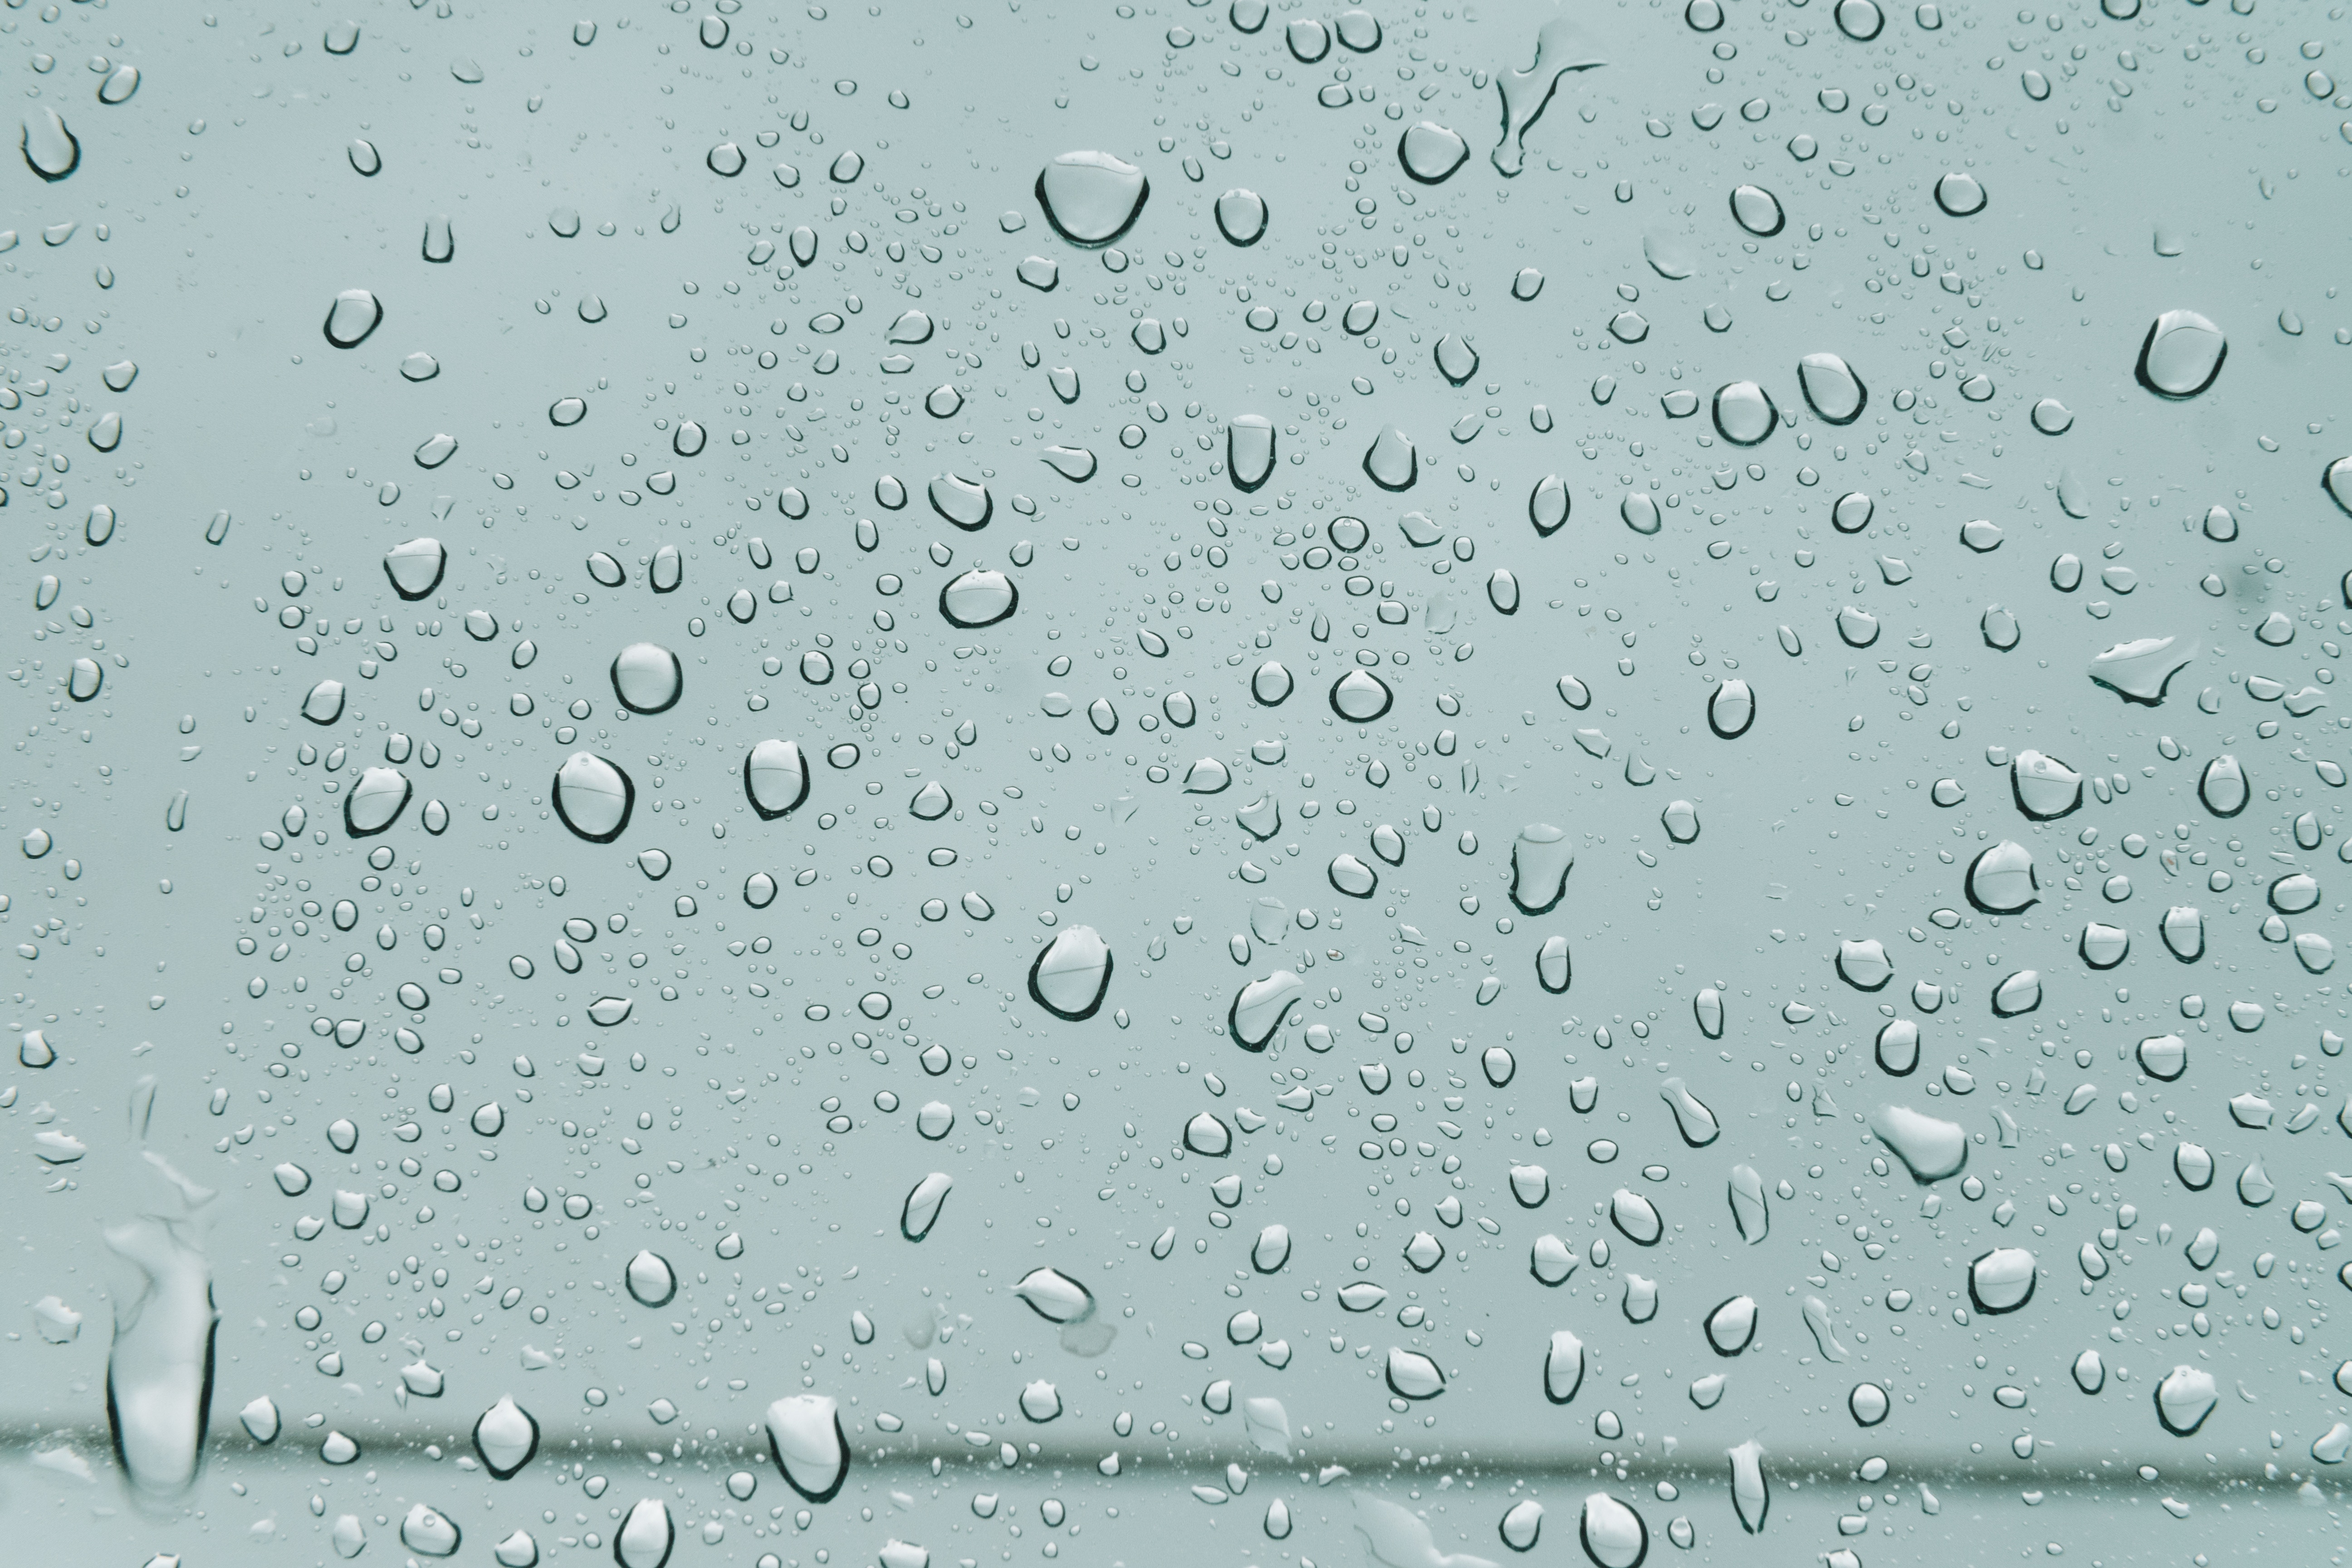 surface, form, rain, drops, macro, wet, moisture, forms, humid